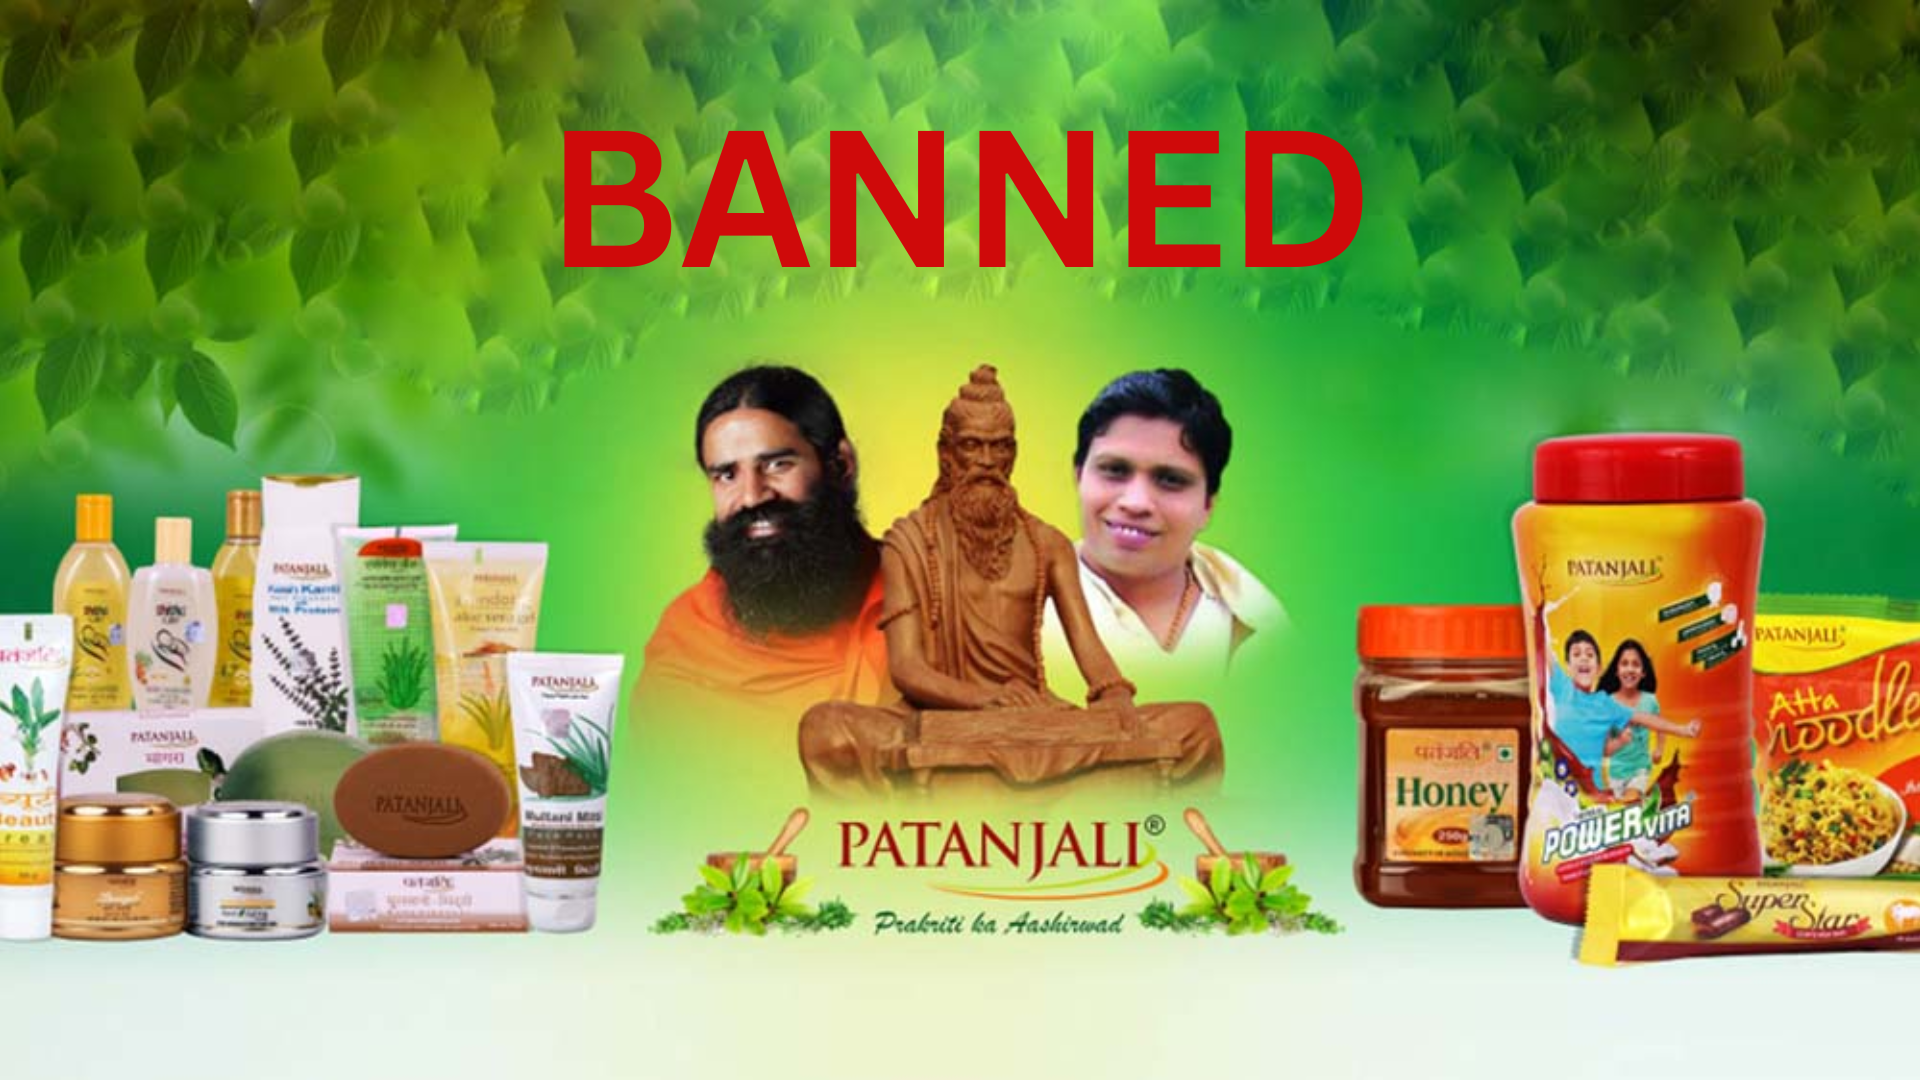 Patanjali Advertisements Banned : Supreme Court